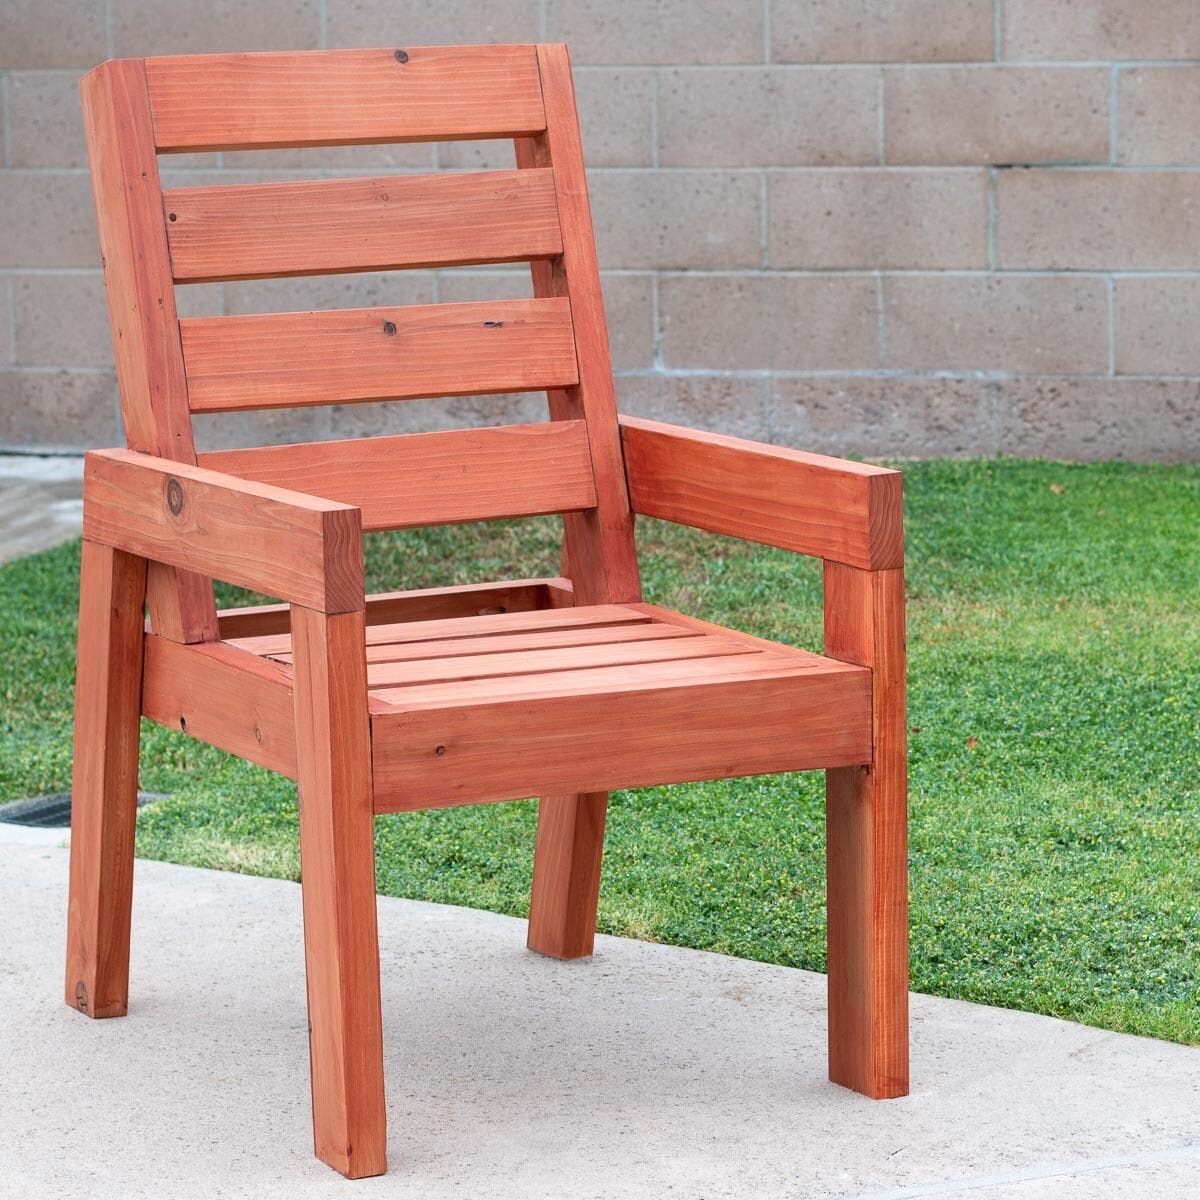 https://shop.anikasdiylife.com/wp-content/uploads/2022/07/DIY-2x4-outdoor-chair-Anikas-DIY.jpeg